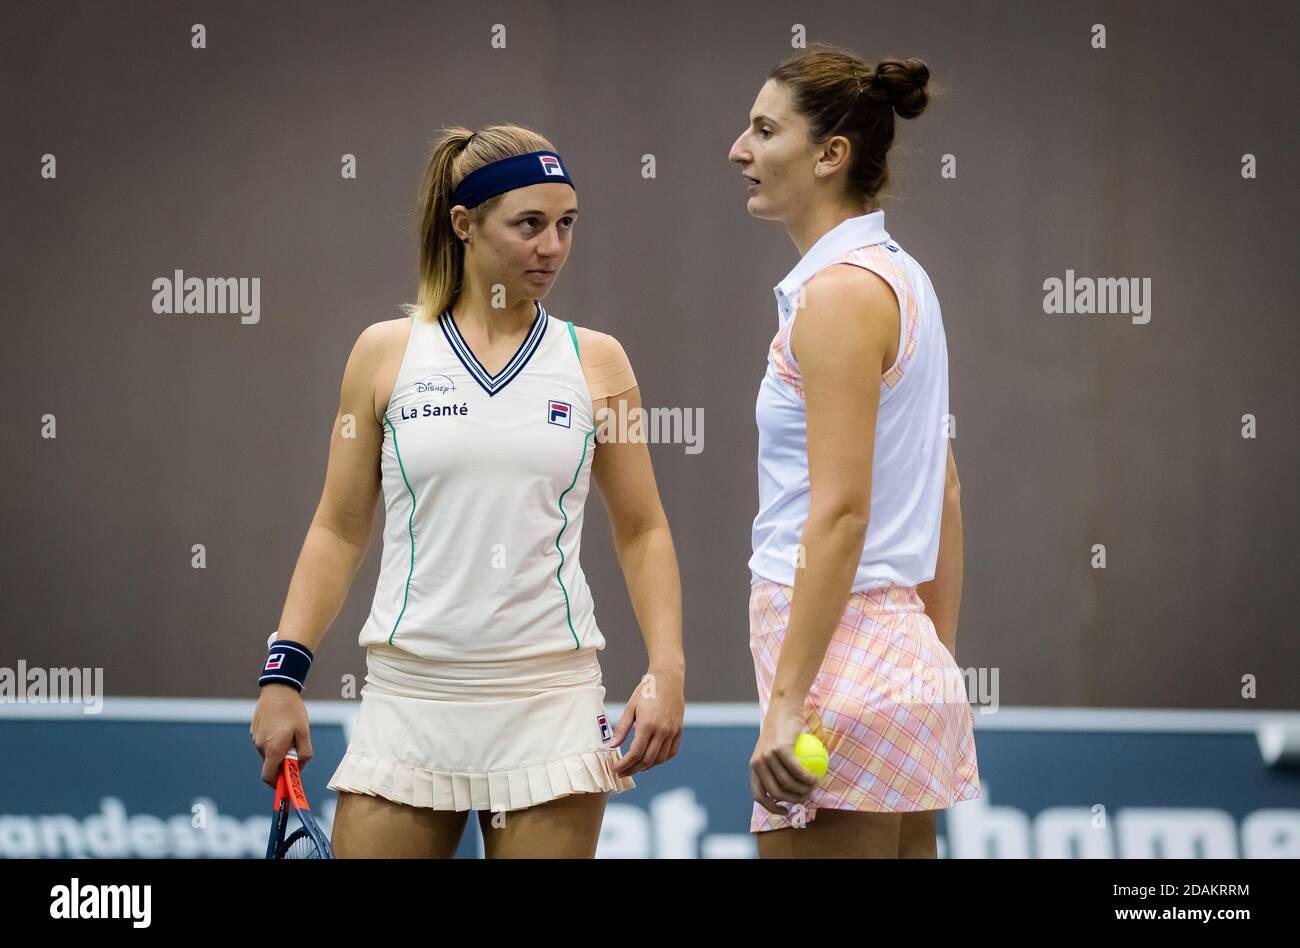 Nadia Podoroska of Argentina playing doubles with Irina-Camelia Begu of  Romania at the 2020 Upper Austria Ladies Linz WTA Internat / LM Stock Photo  - Alamy